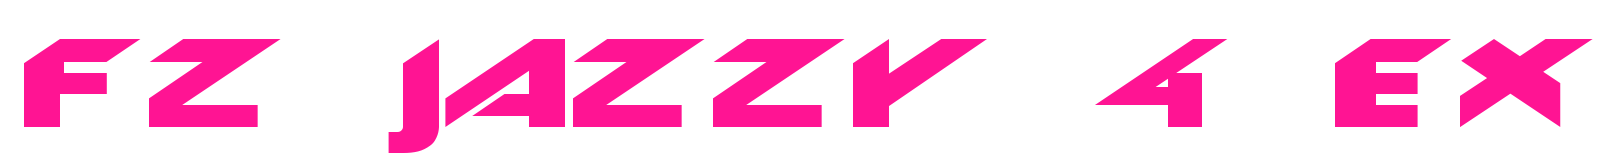 FZ JAZZY 4 EX预览图片